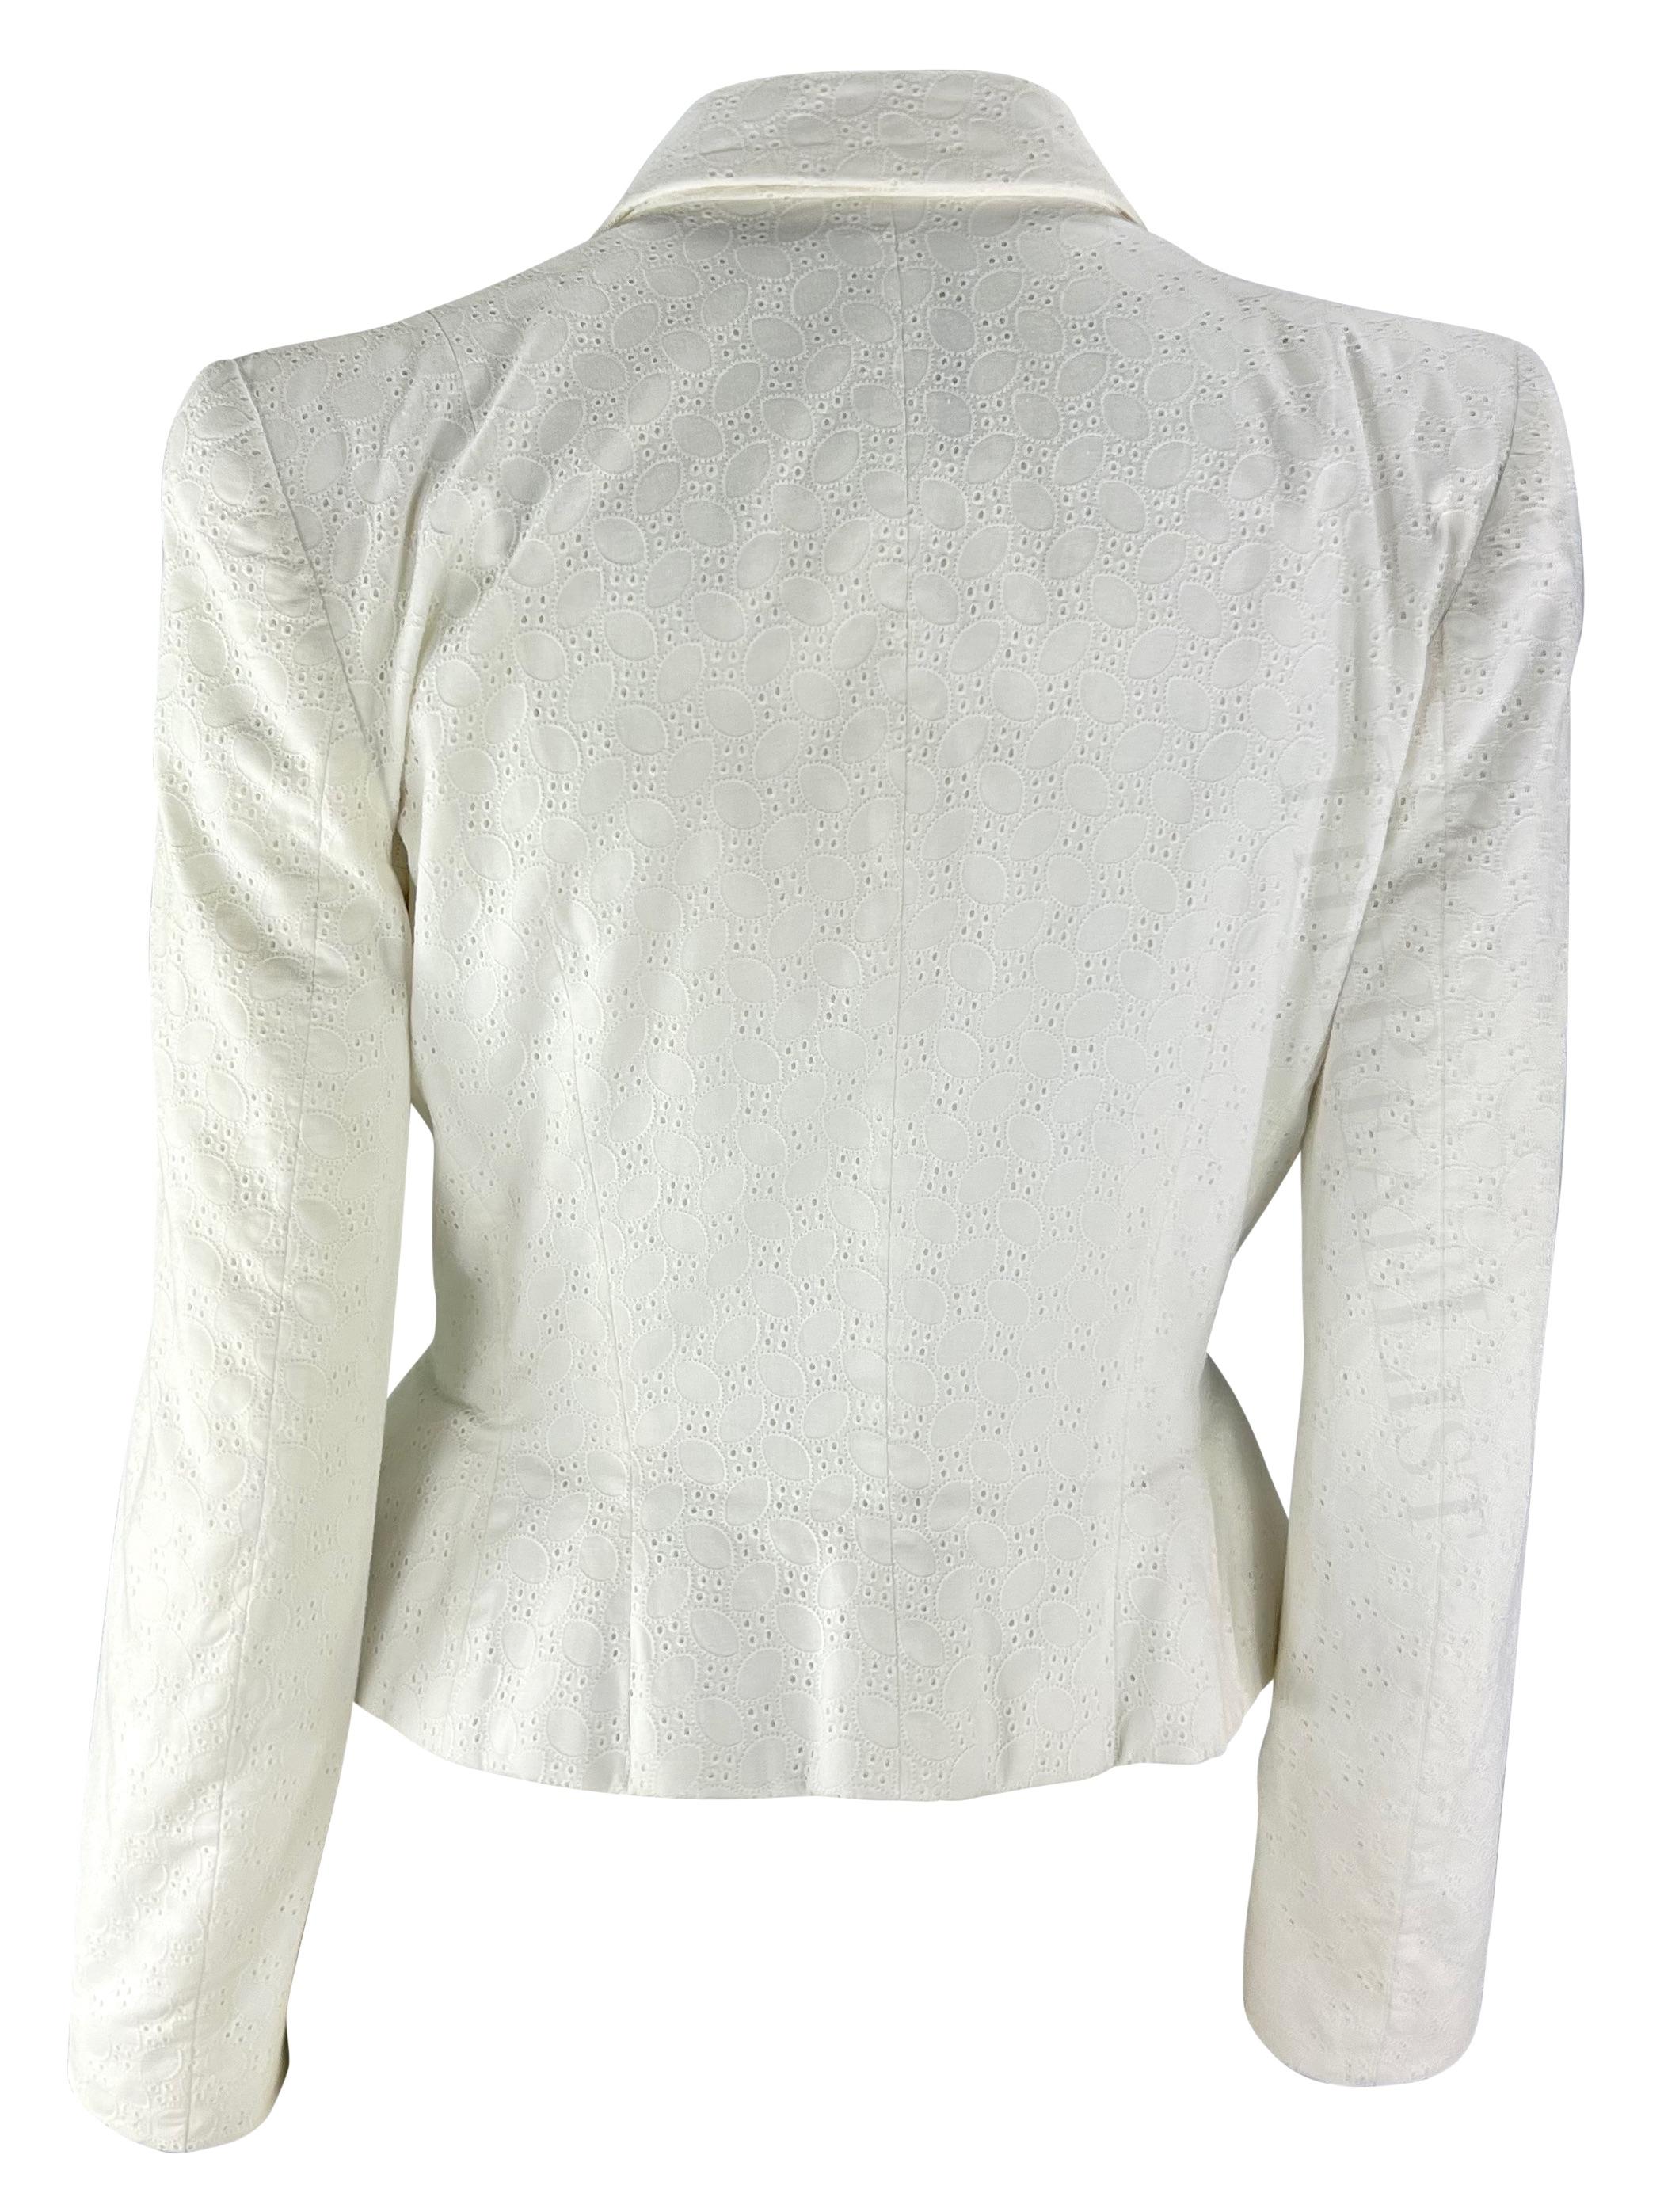 S/S 1996 John Galliano Paris Broderie Anglaise Ballet Peplum White Jacket Blazer For Sale 1